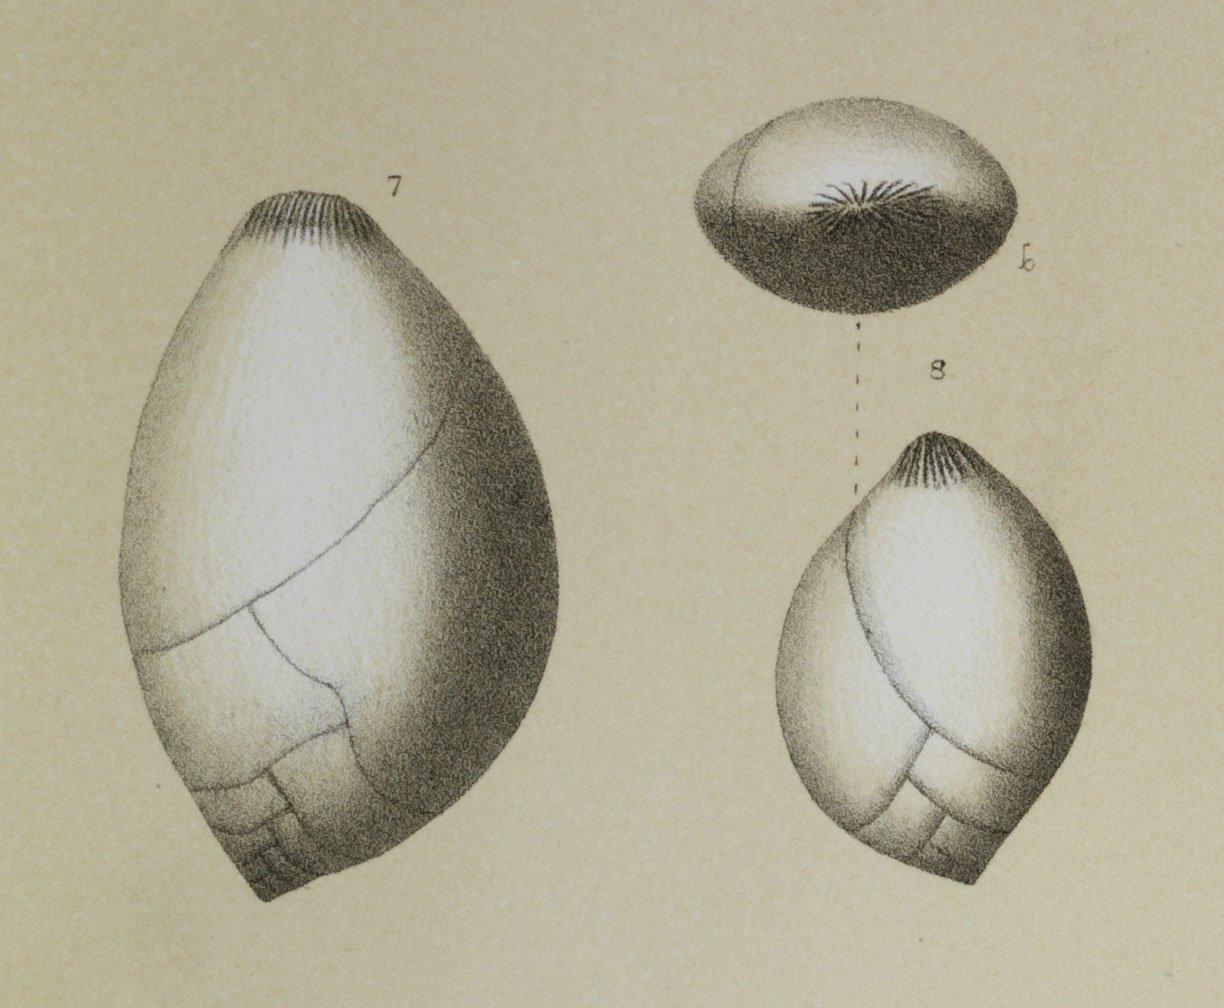 To NHMUK collection (Polymorphina ovata Perner, 1892; NHMUK:ecatalogue:3092978)